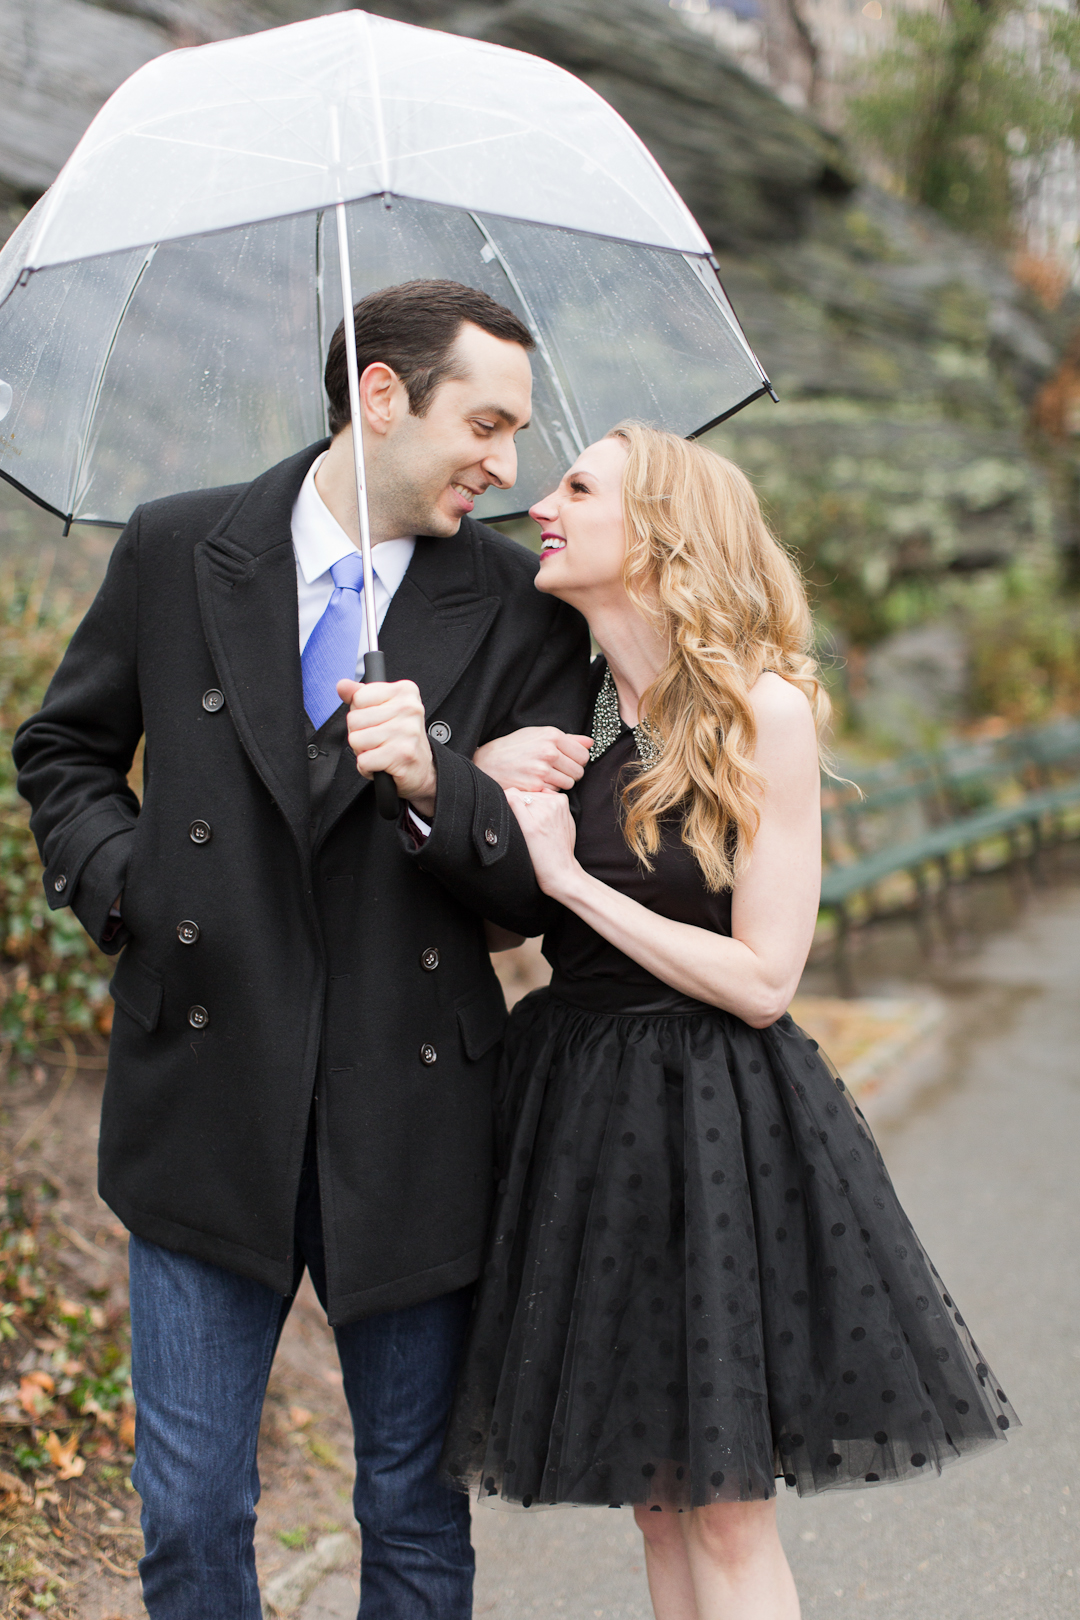 Melissa Kruse Photography - Jenna & Evan Central Park NYC Engagement Photos-42.jpg